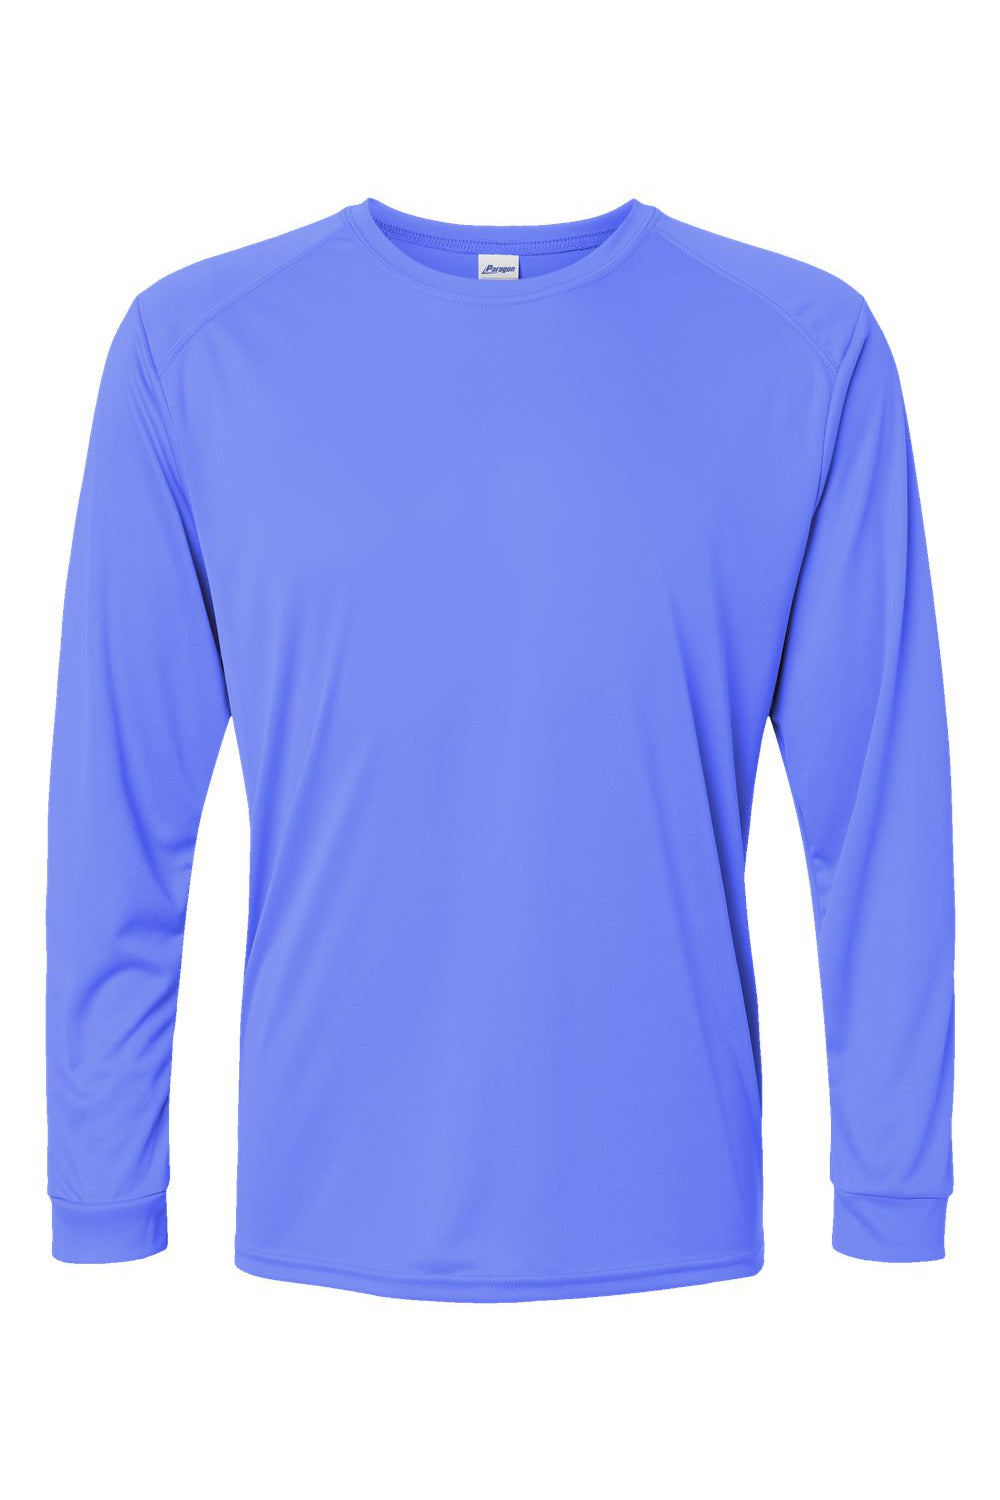 Paragon 210 Mens Islander Performance Long Sleeve Crewneck T-Shirt Bimini Blue Flat Front